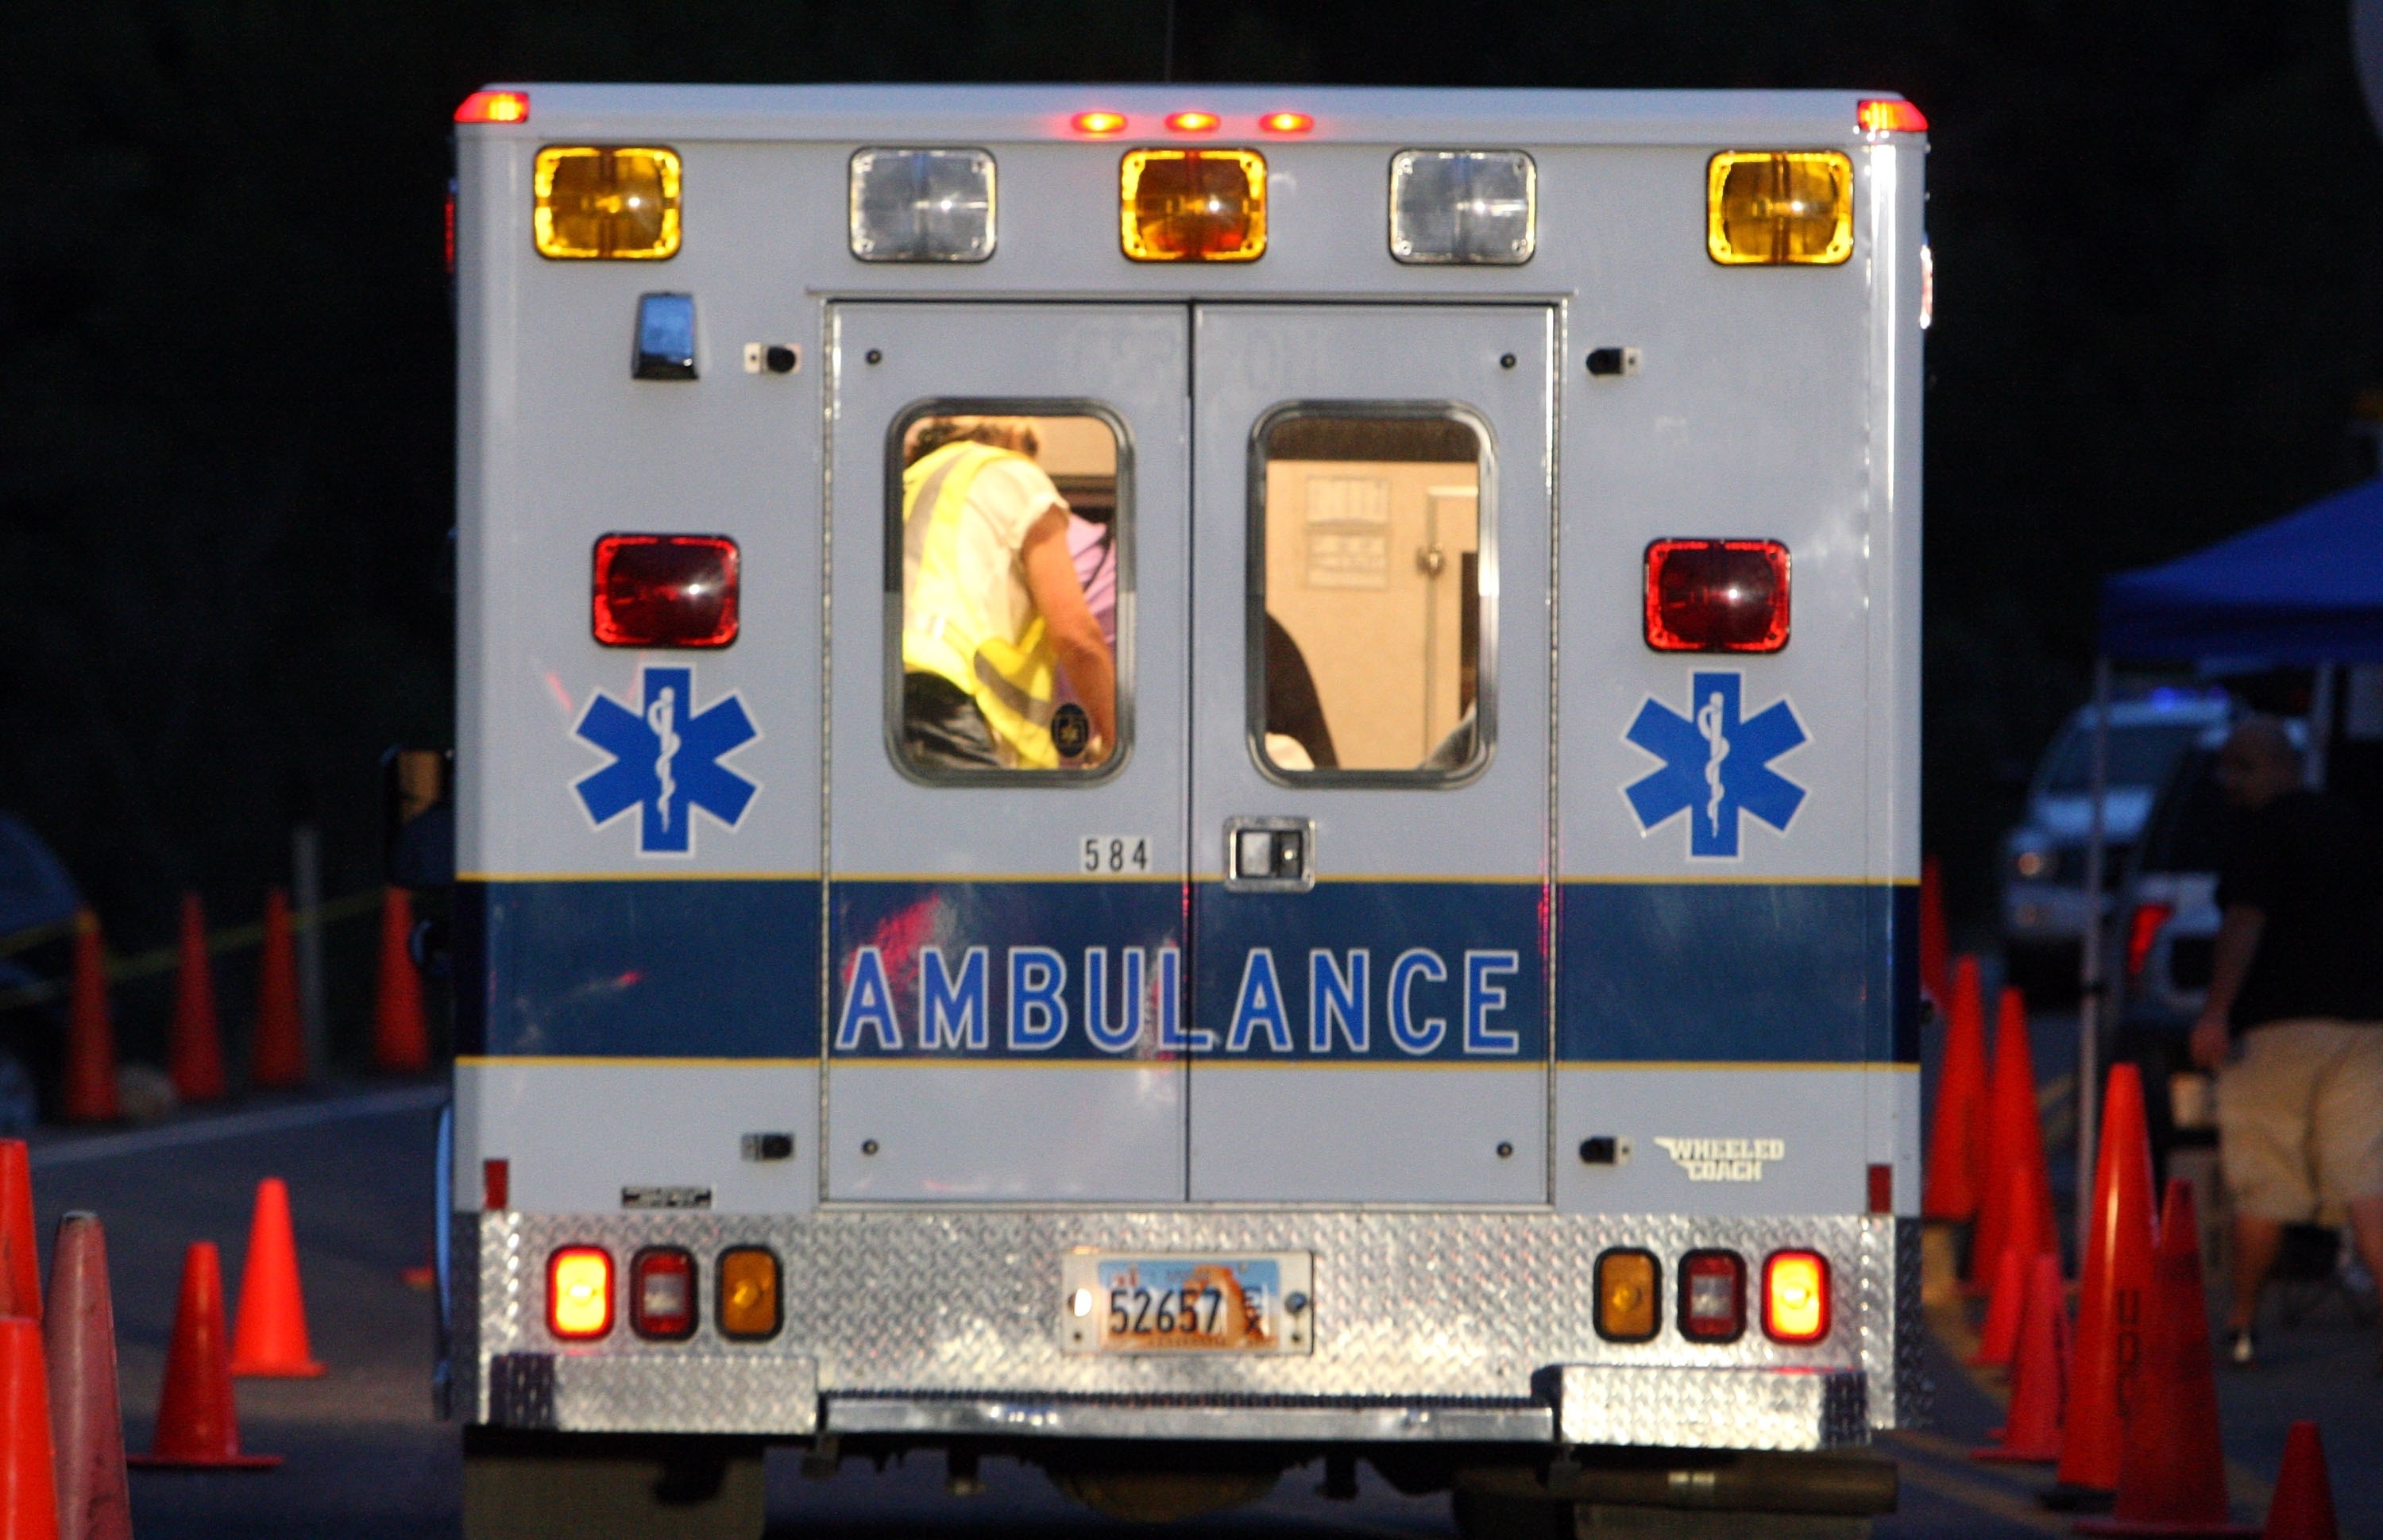 An ambulance truck